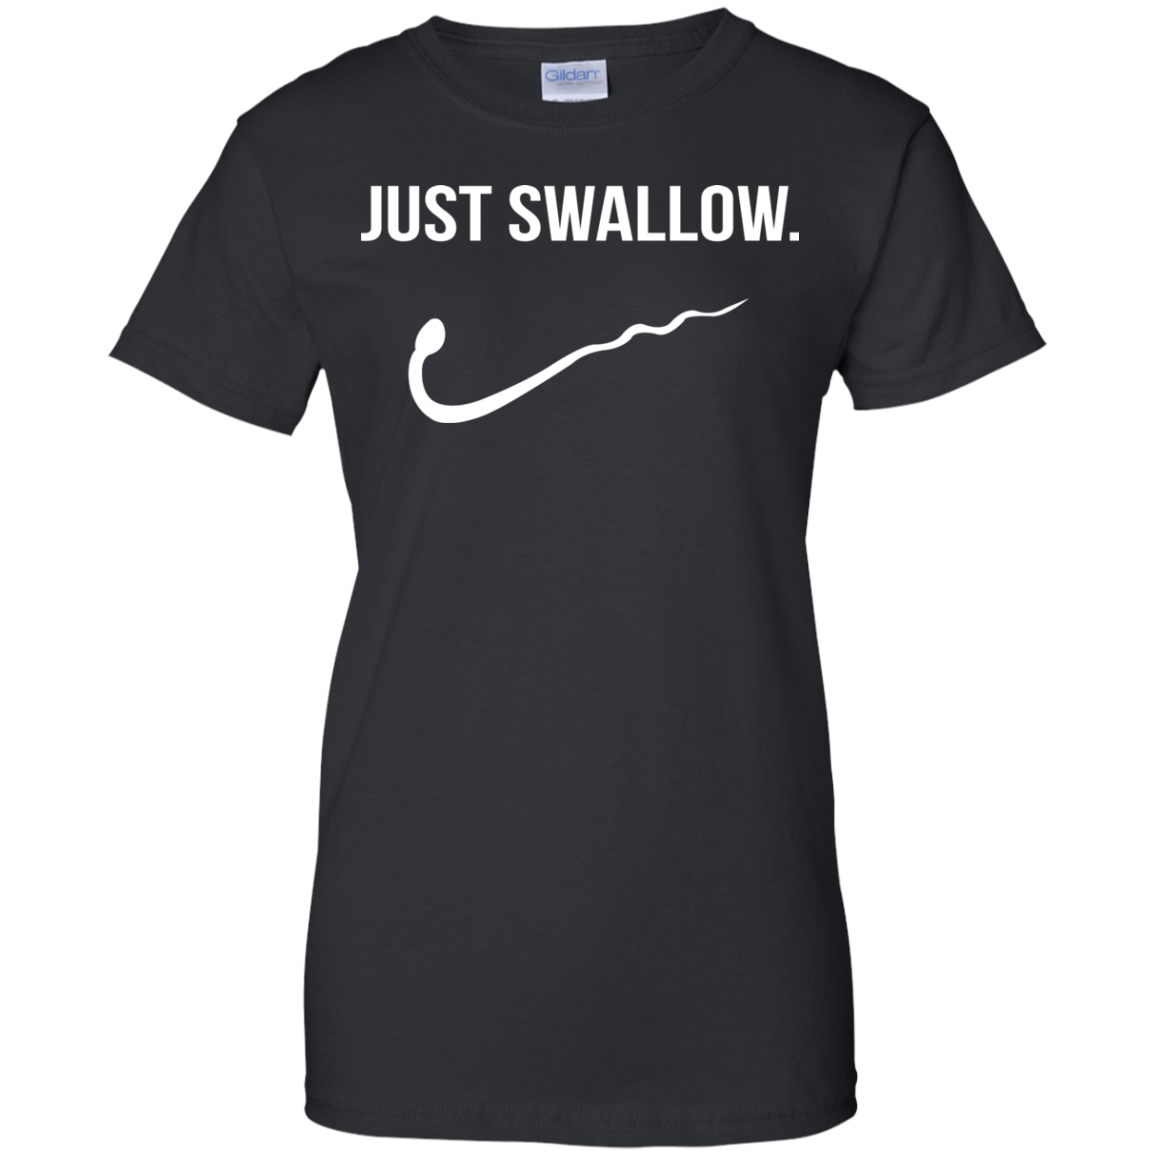 Justswallow